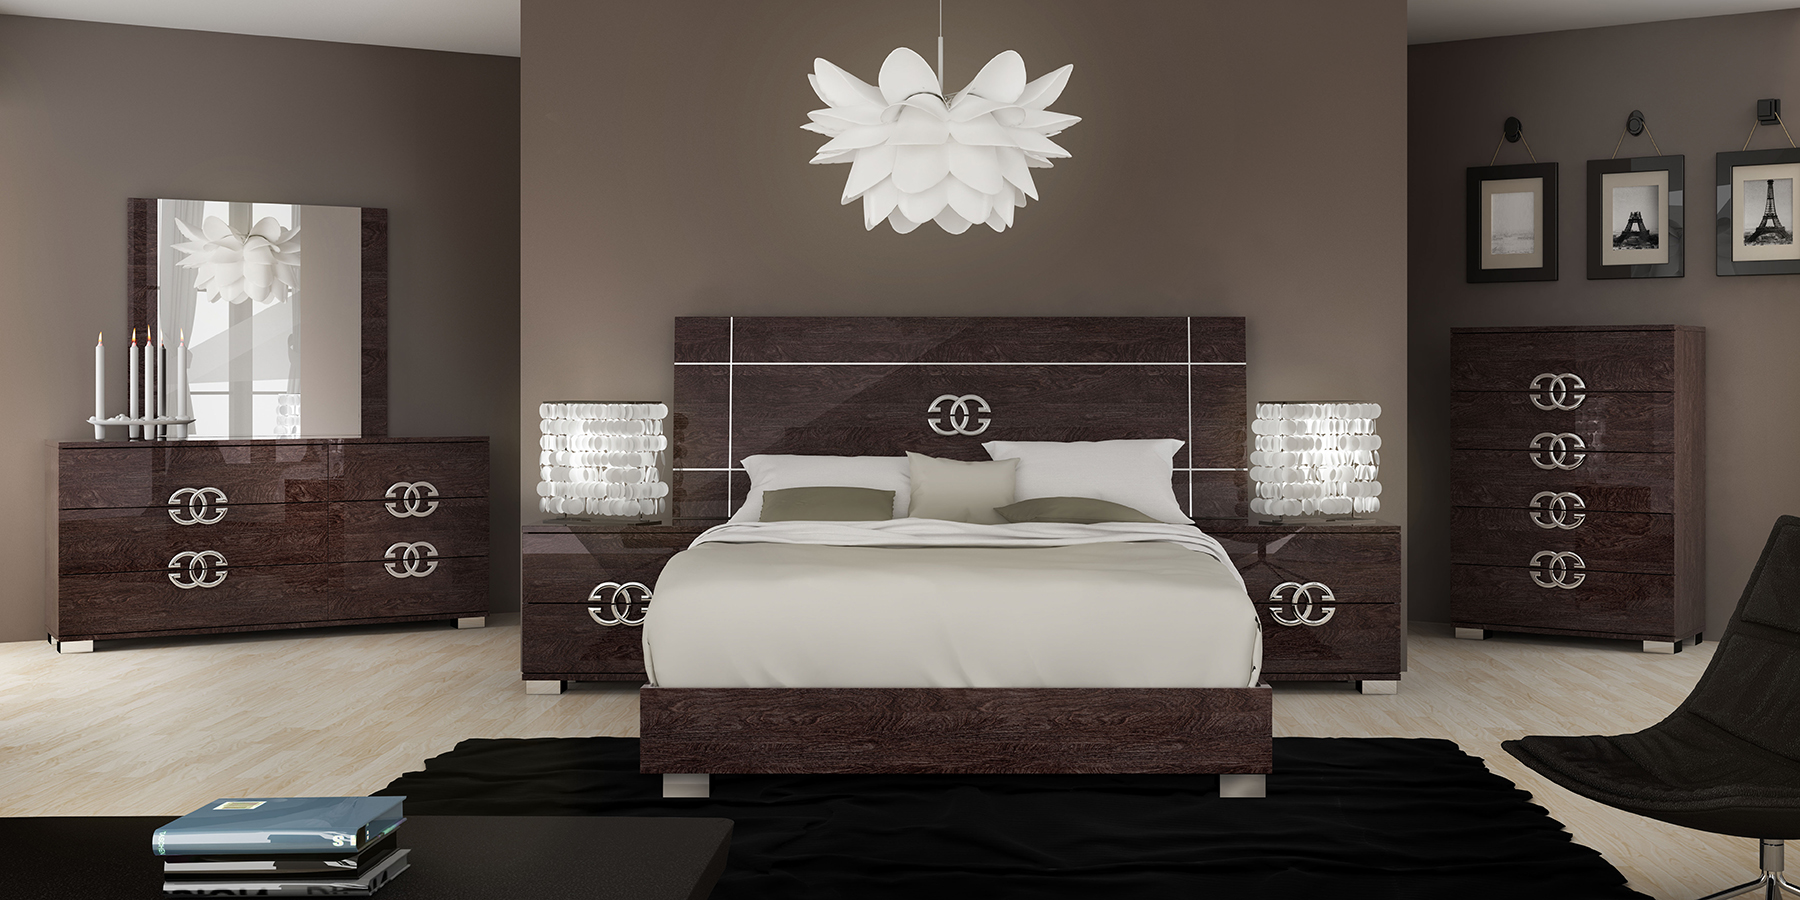 Prestige CLASSIC Bedroom, Modern Bedrooms QS and KS, Bedroom Furniture